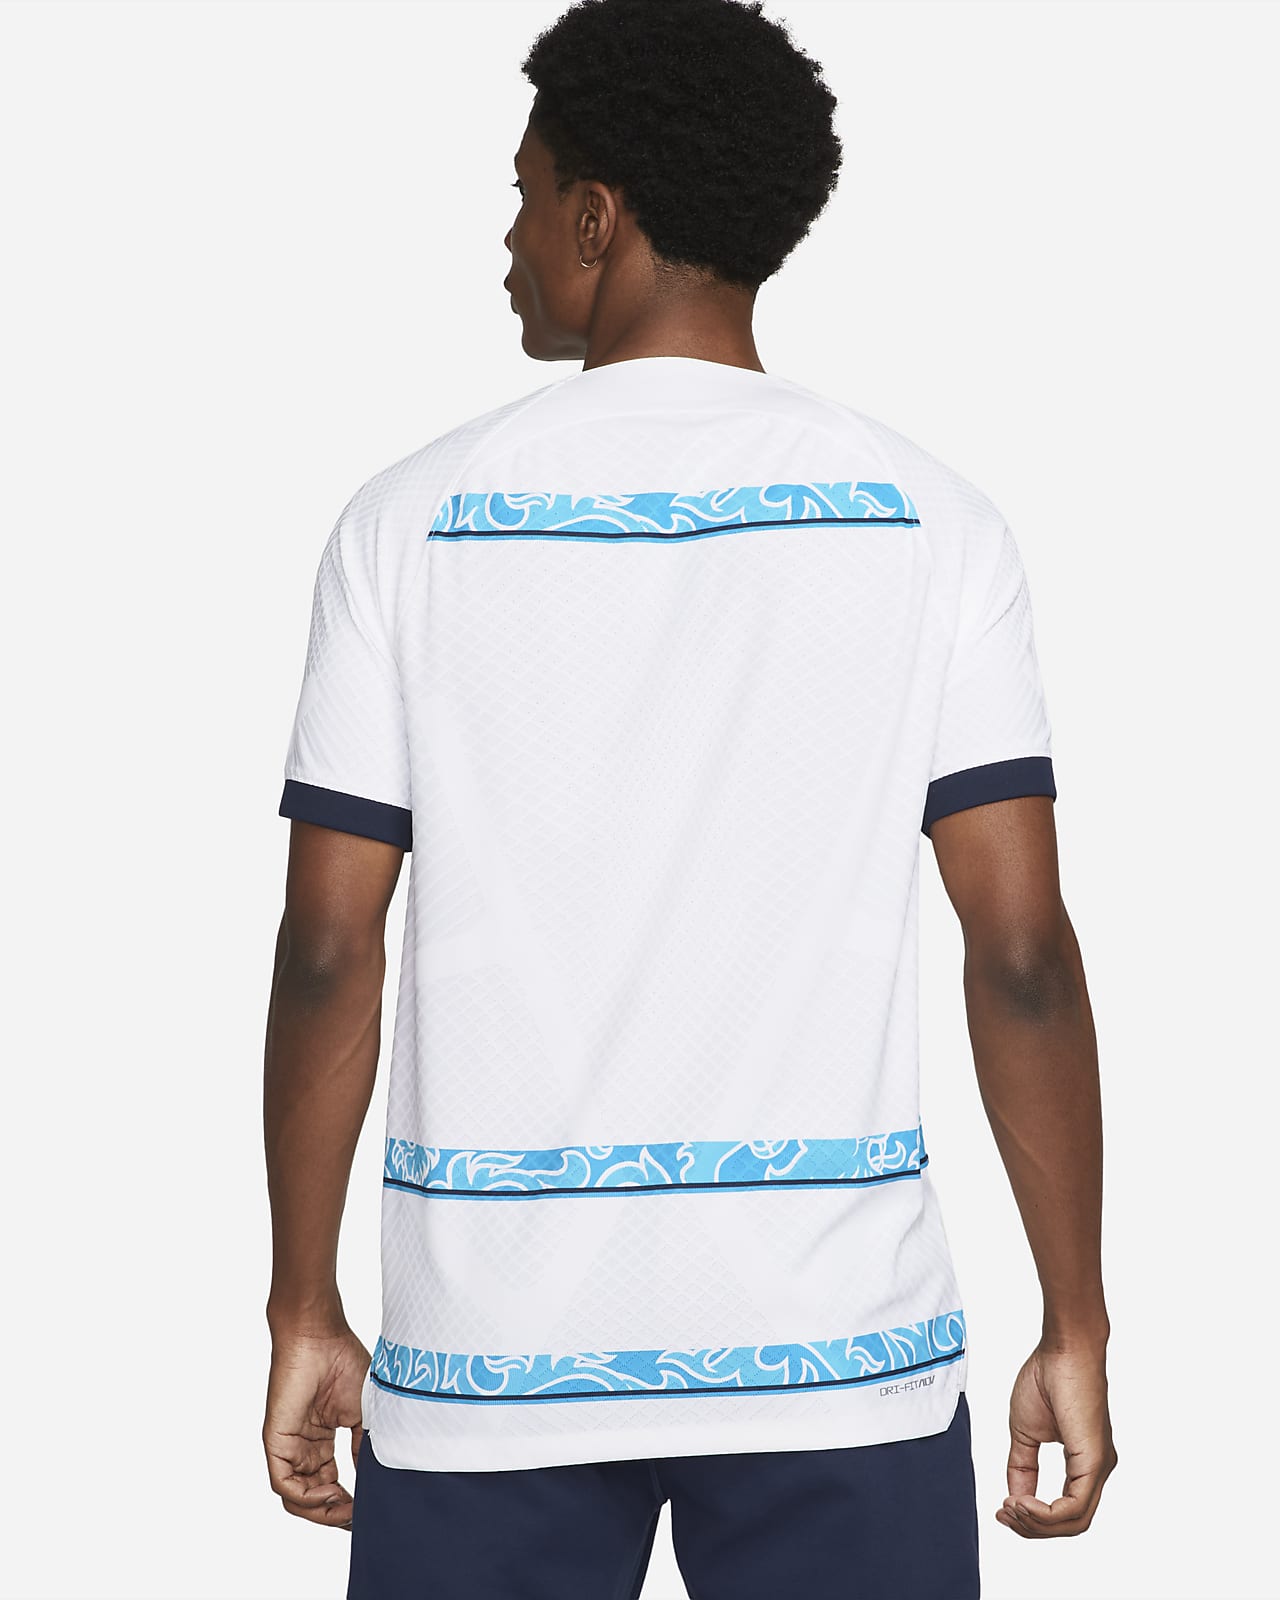 Nike Dri-Fit F.C. Men's Short-Sleeve Soccer Jersey